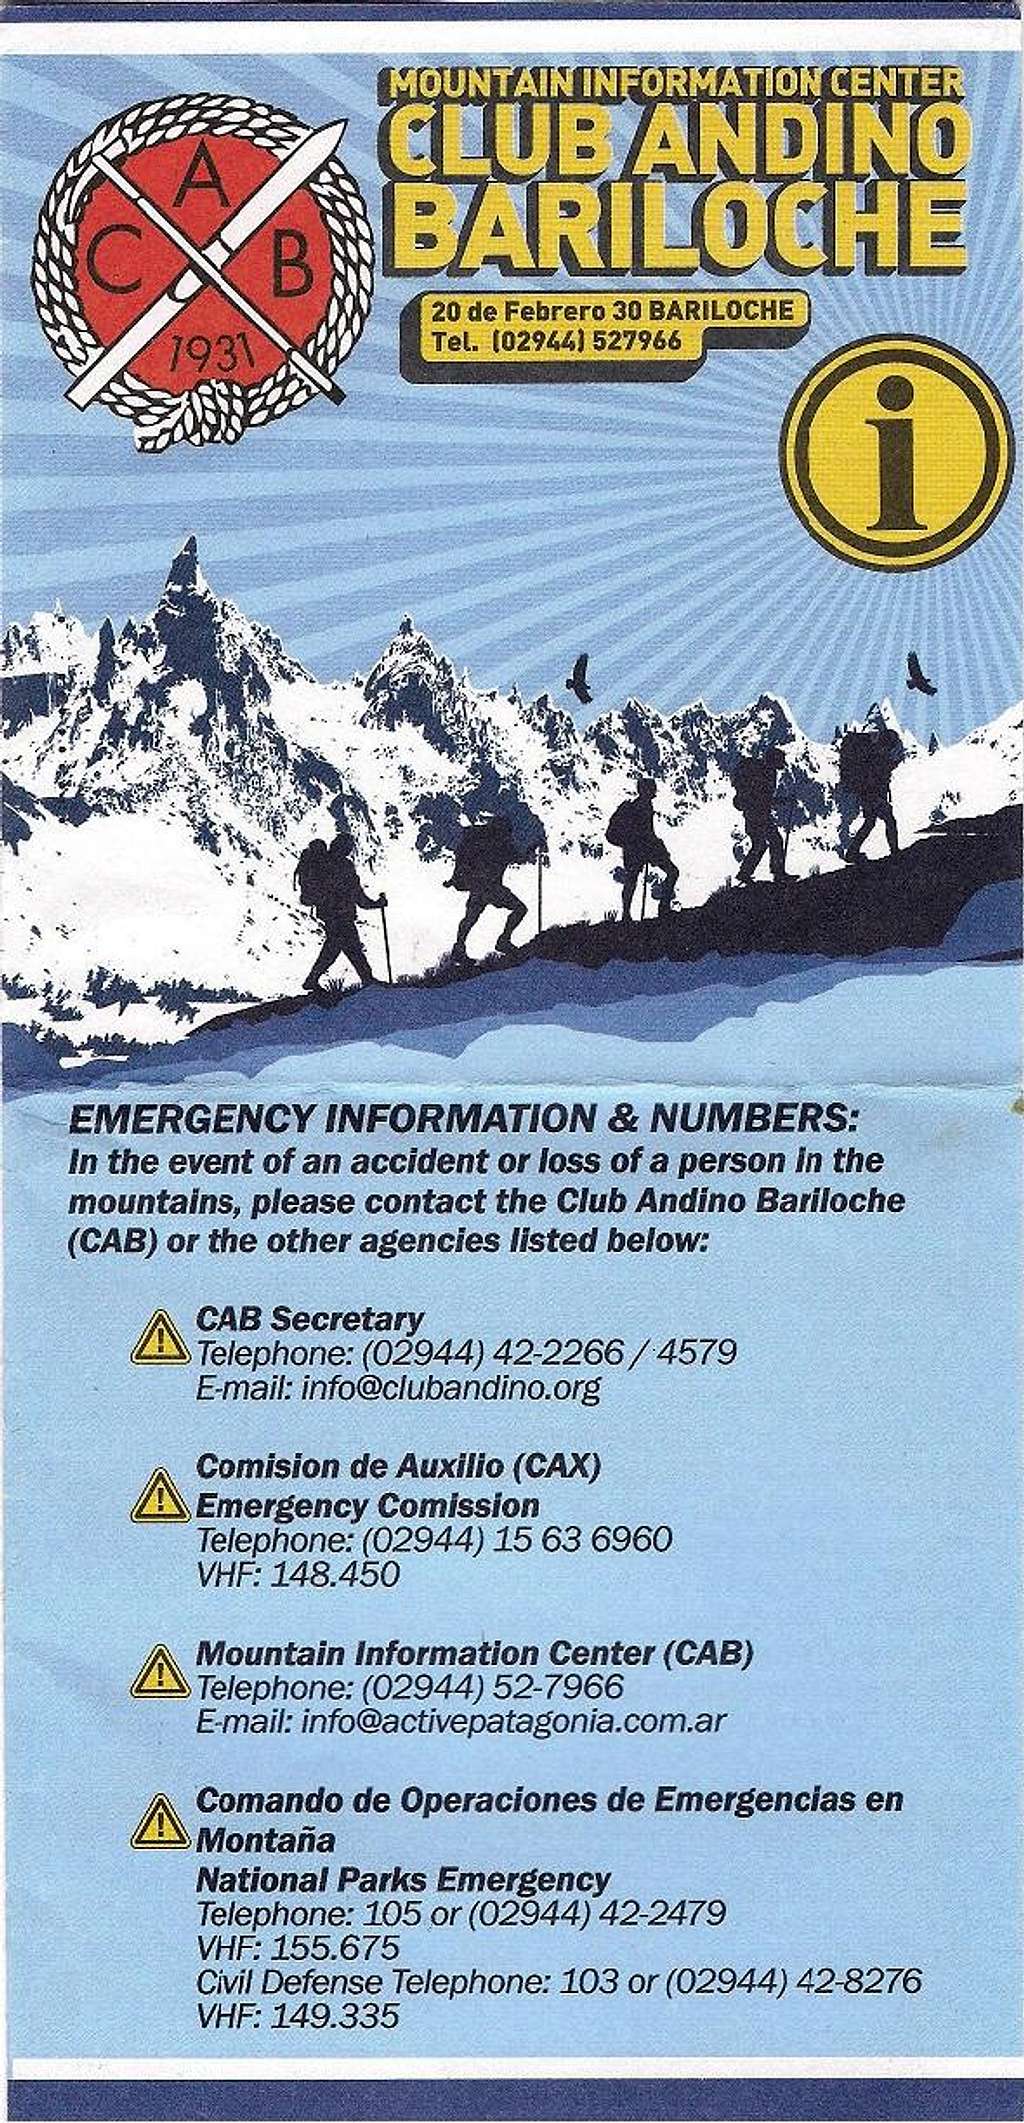 Club Andino Bariloche leaflet